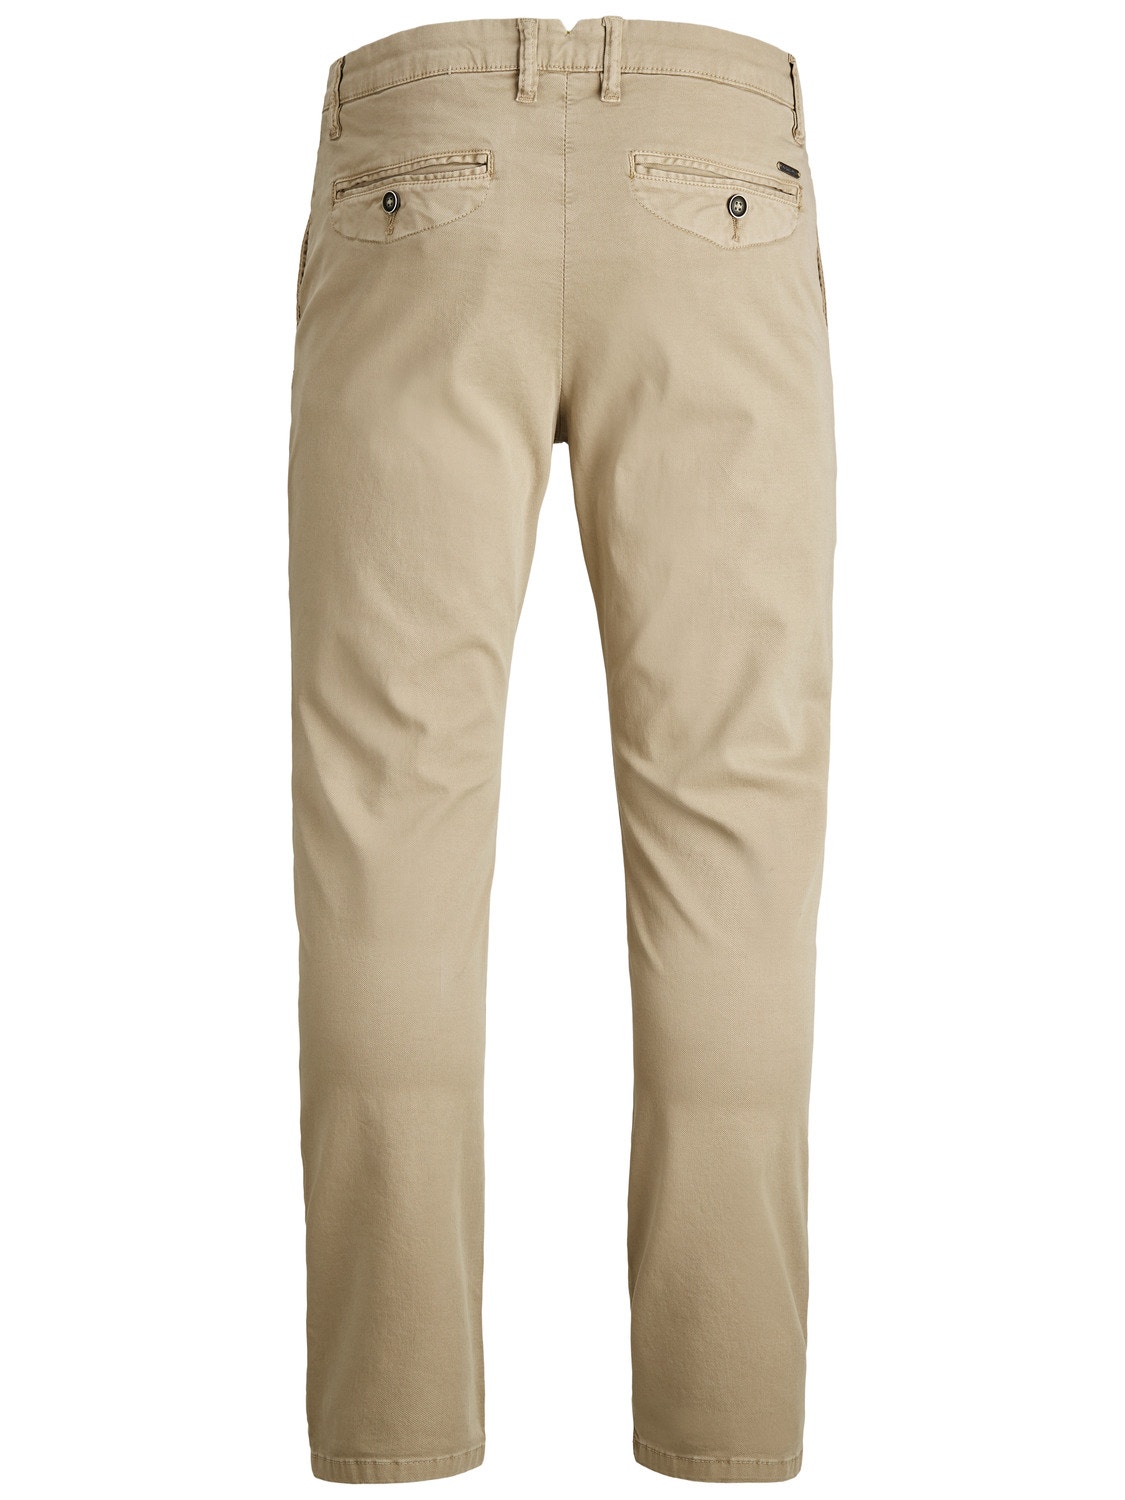 Jack & Jones Slim Fit Plátěné kalhoty Chino -White Pepper - 12254931